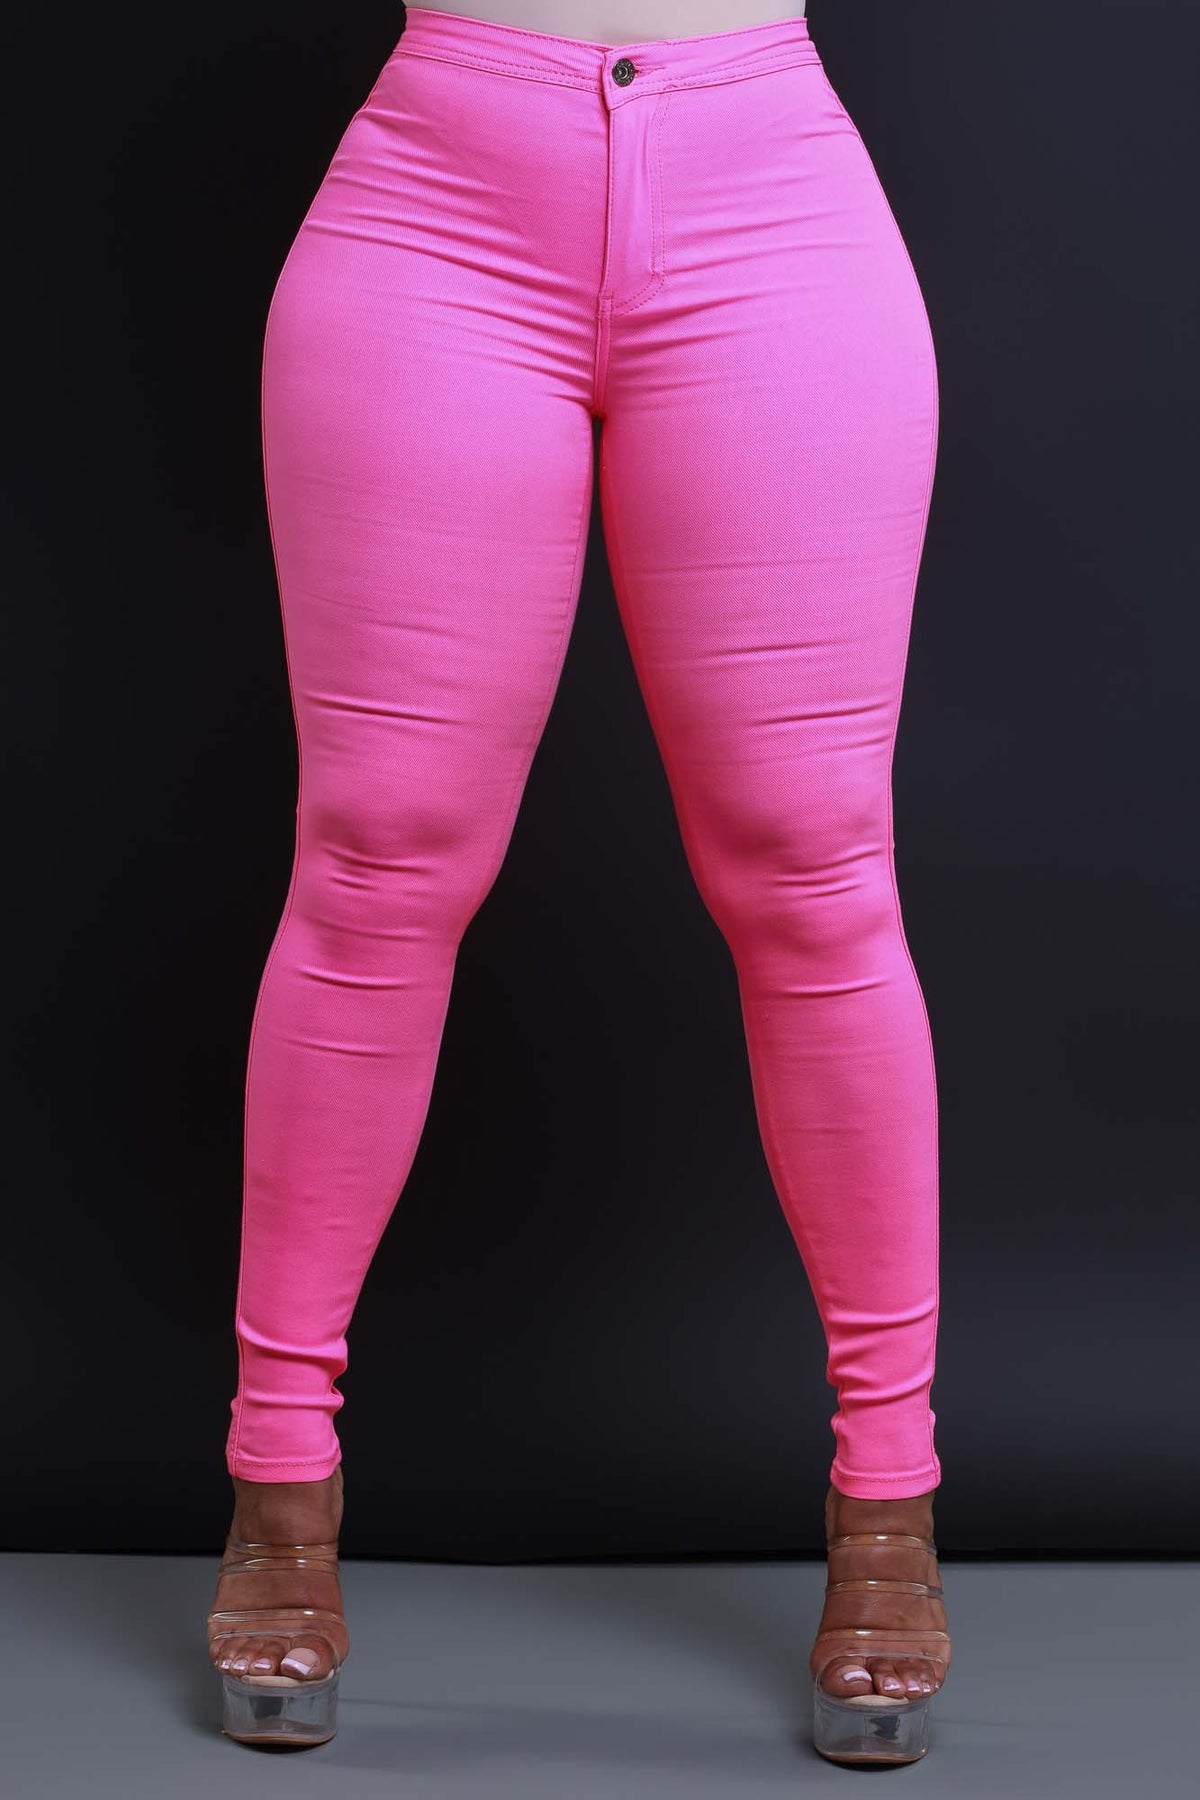 
              $15.99 Super Swank High Waist Stretchy Jeans - Neon Pink - Swank A Posh
            